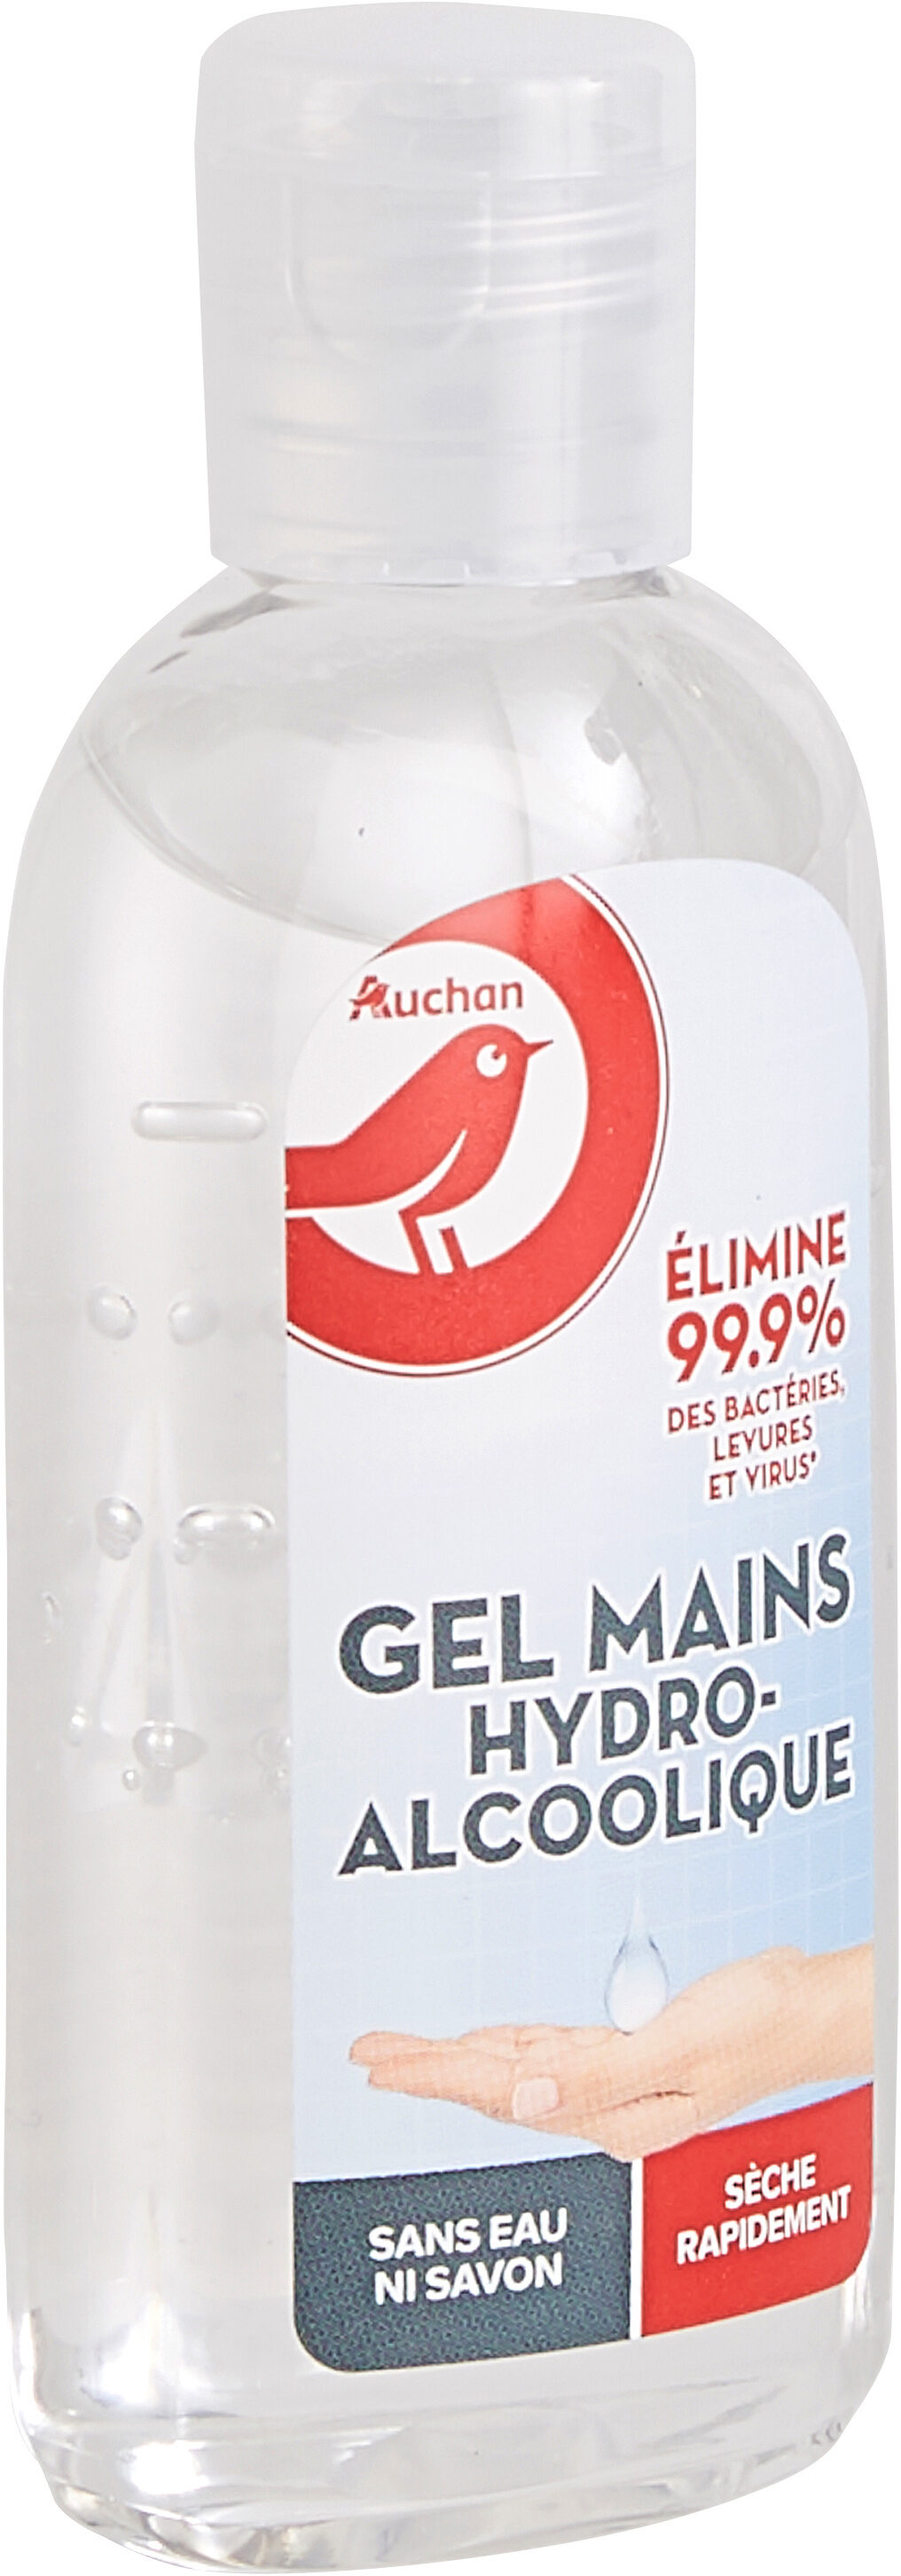 Gel mains hydroalcoolique - מוצר - fr